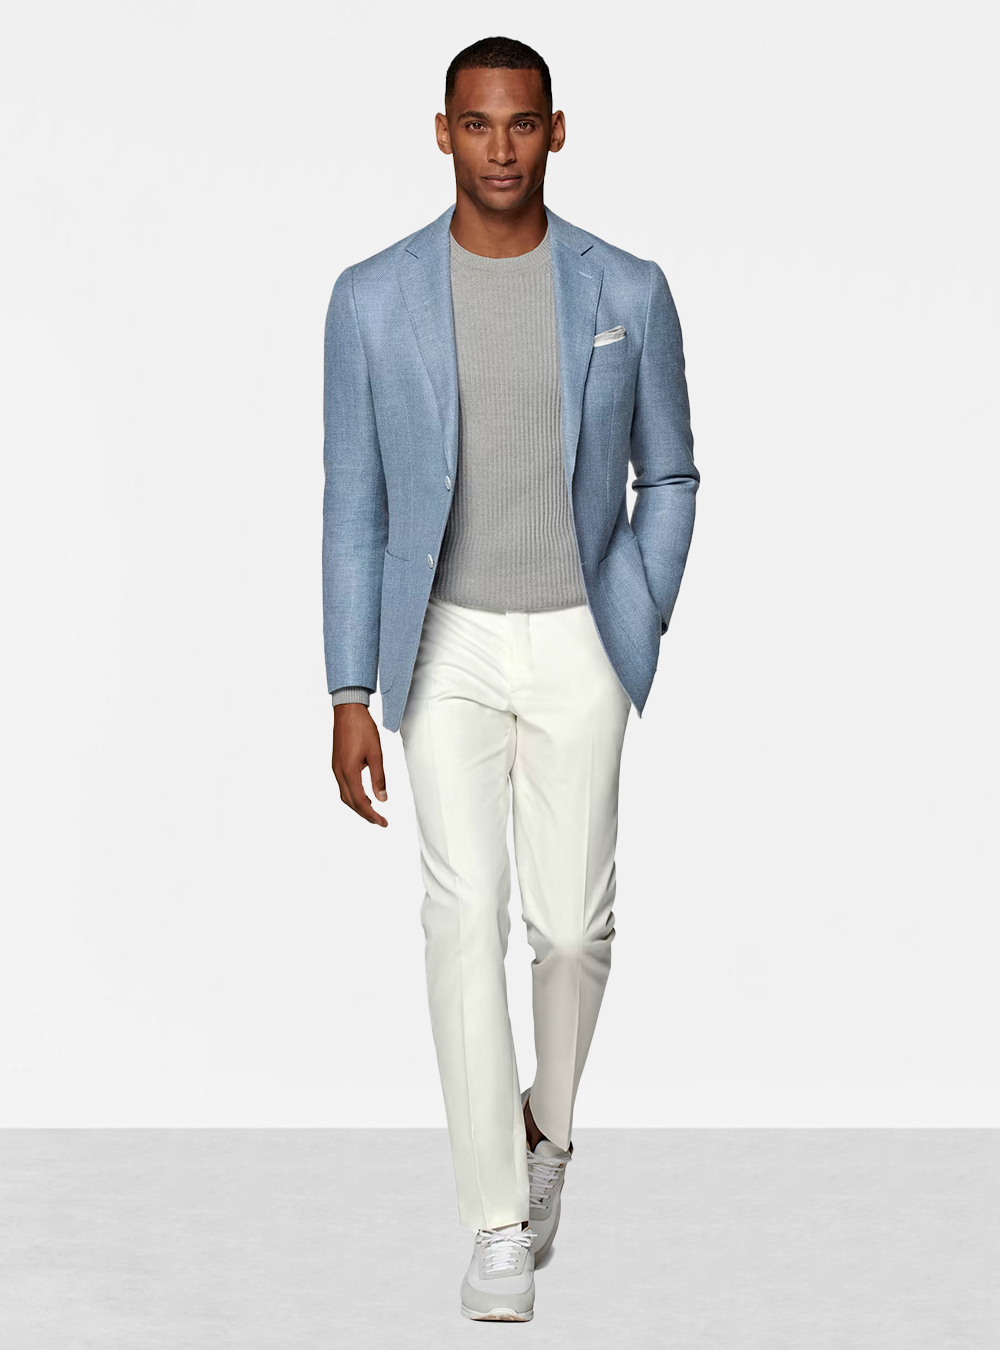 light blue blazer, grey T-shirt, white pants, and grey sneakers